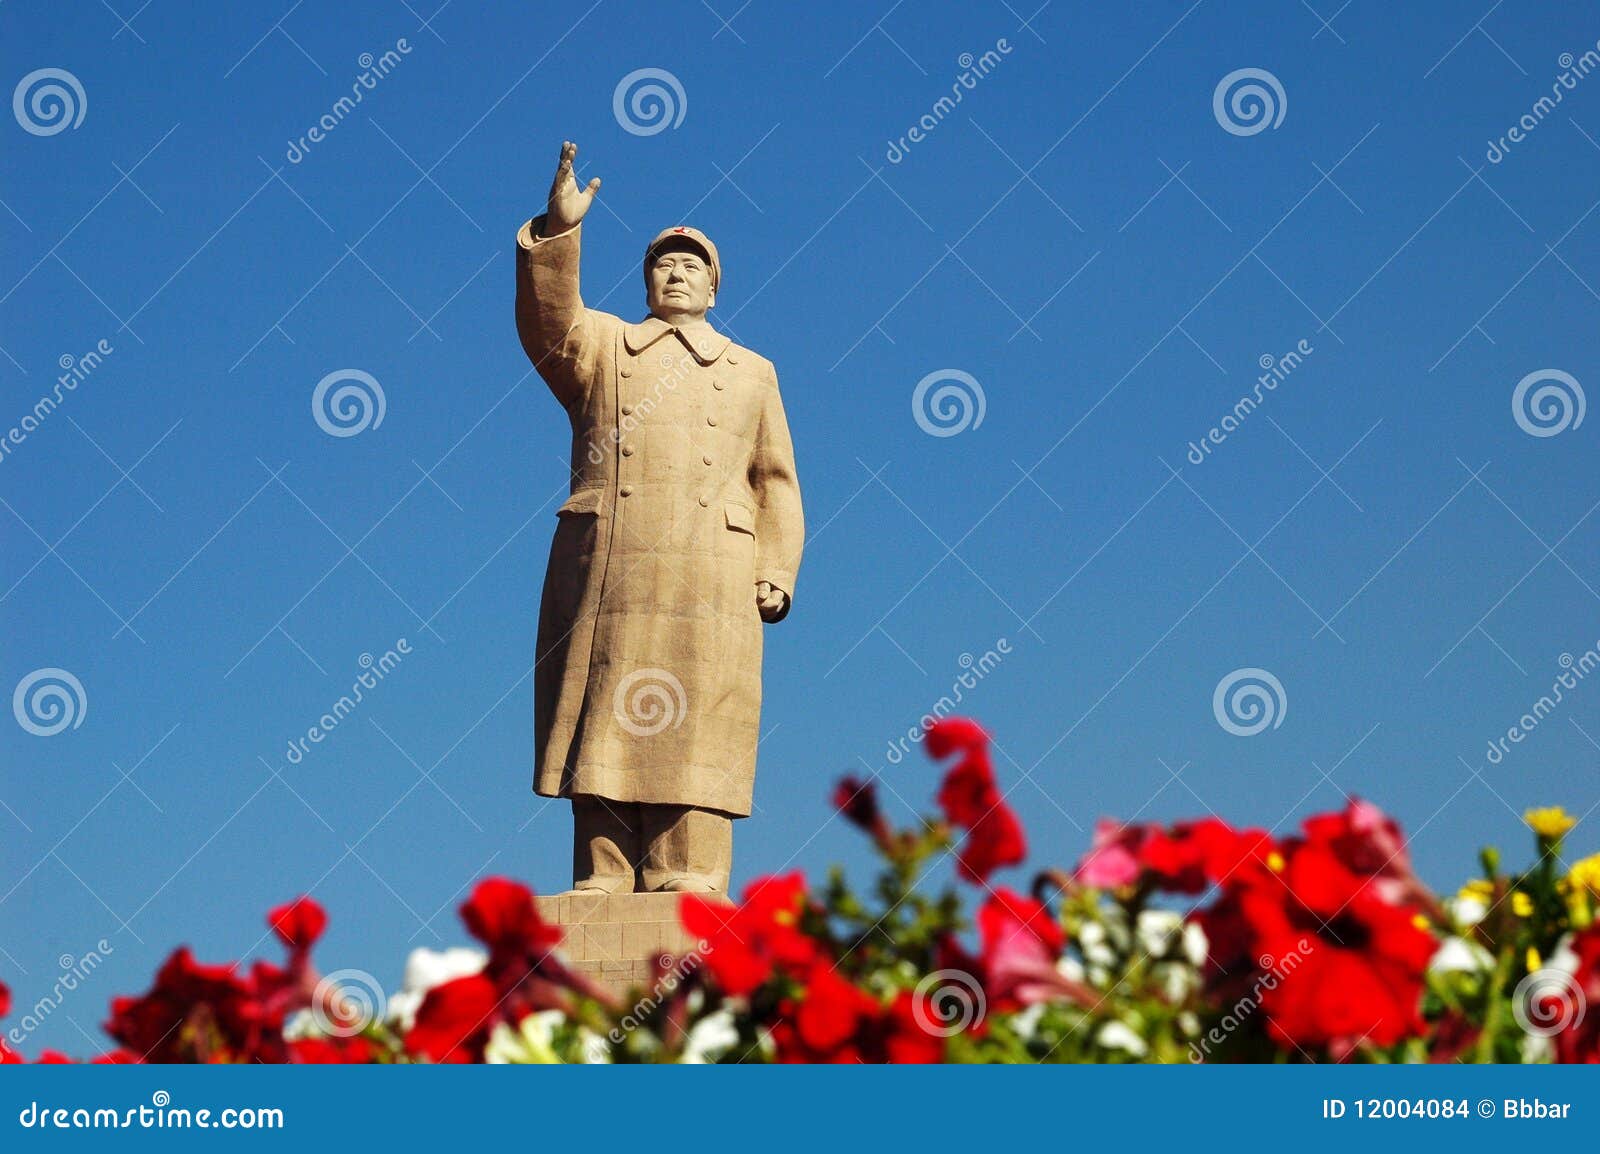 chairman mao's statue